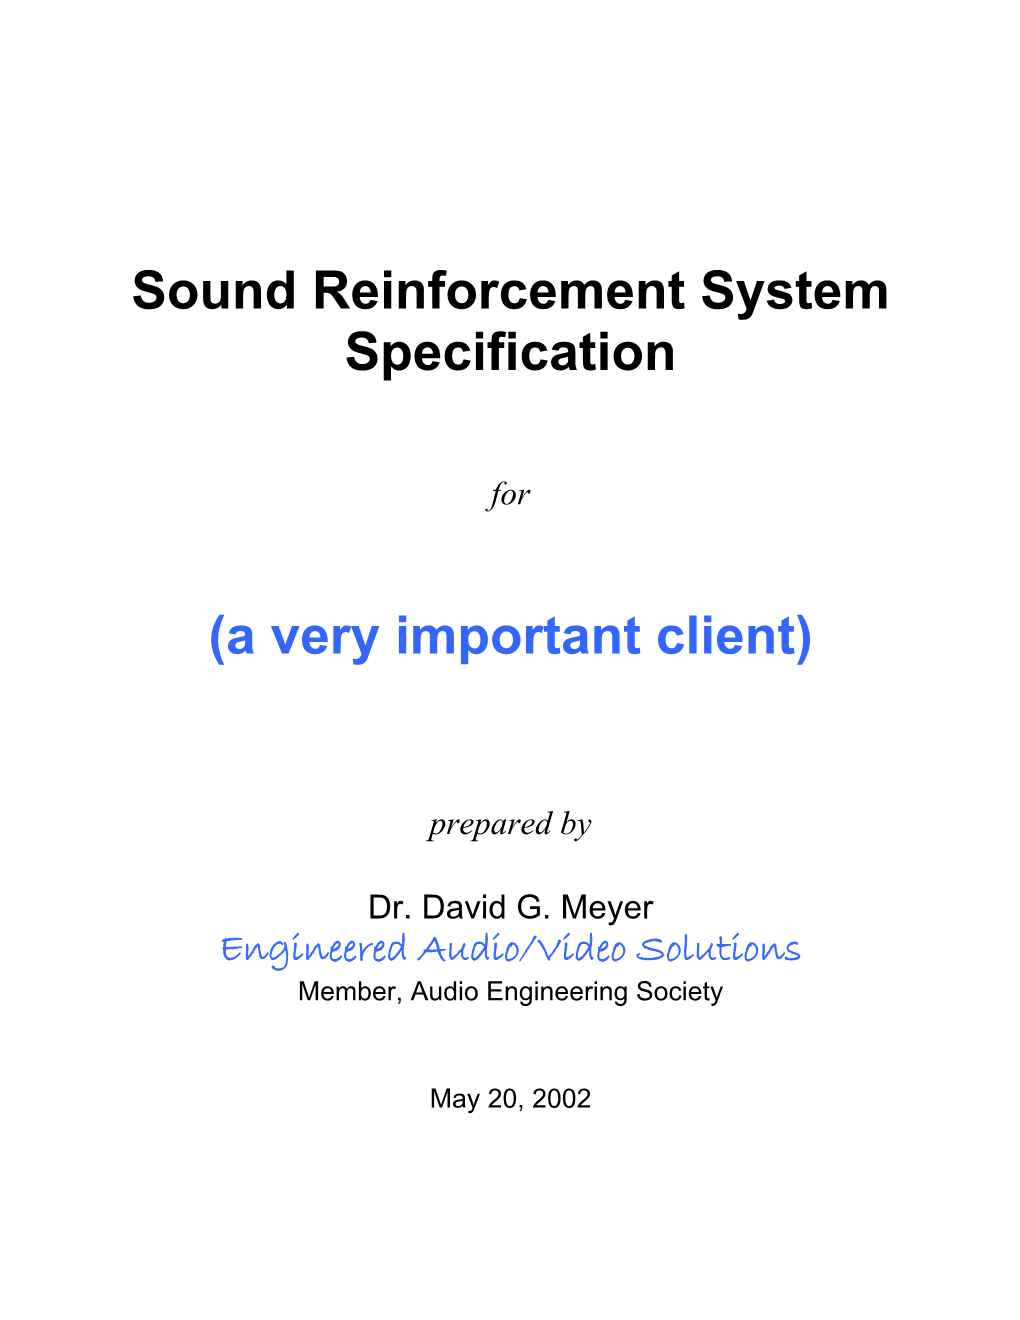 Sample Sound Reinforcement System Specification